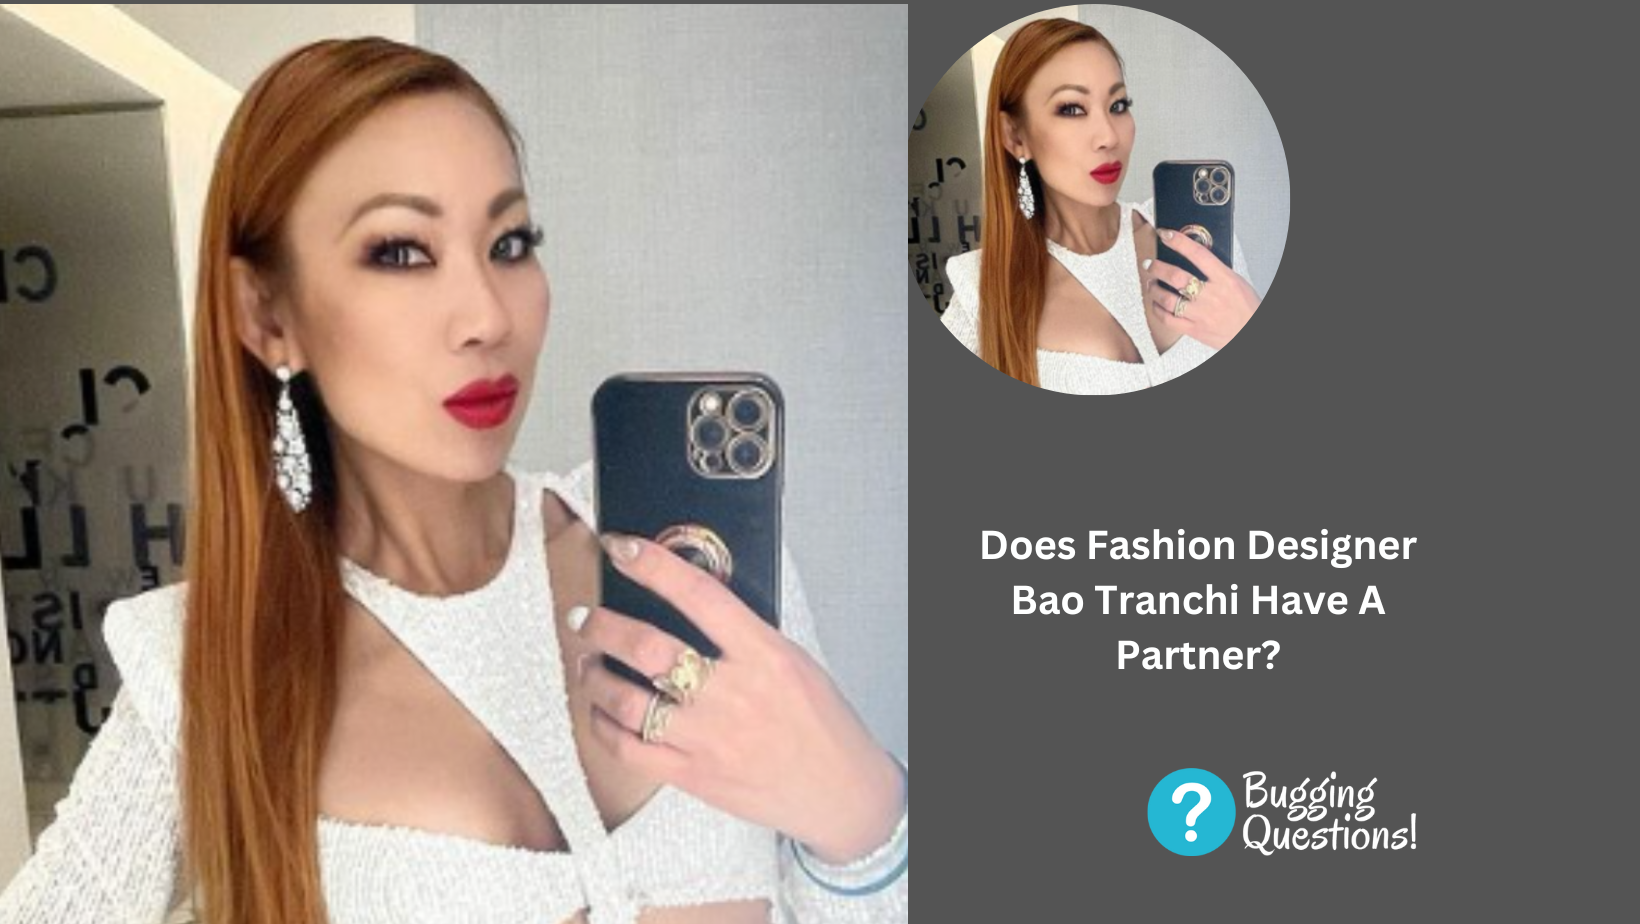 Does Fashion Designer Bao Tranchi Have A Partner?